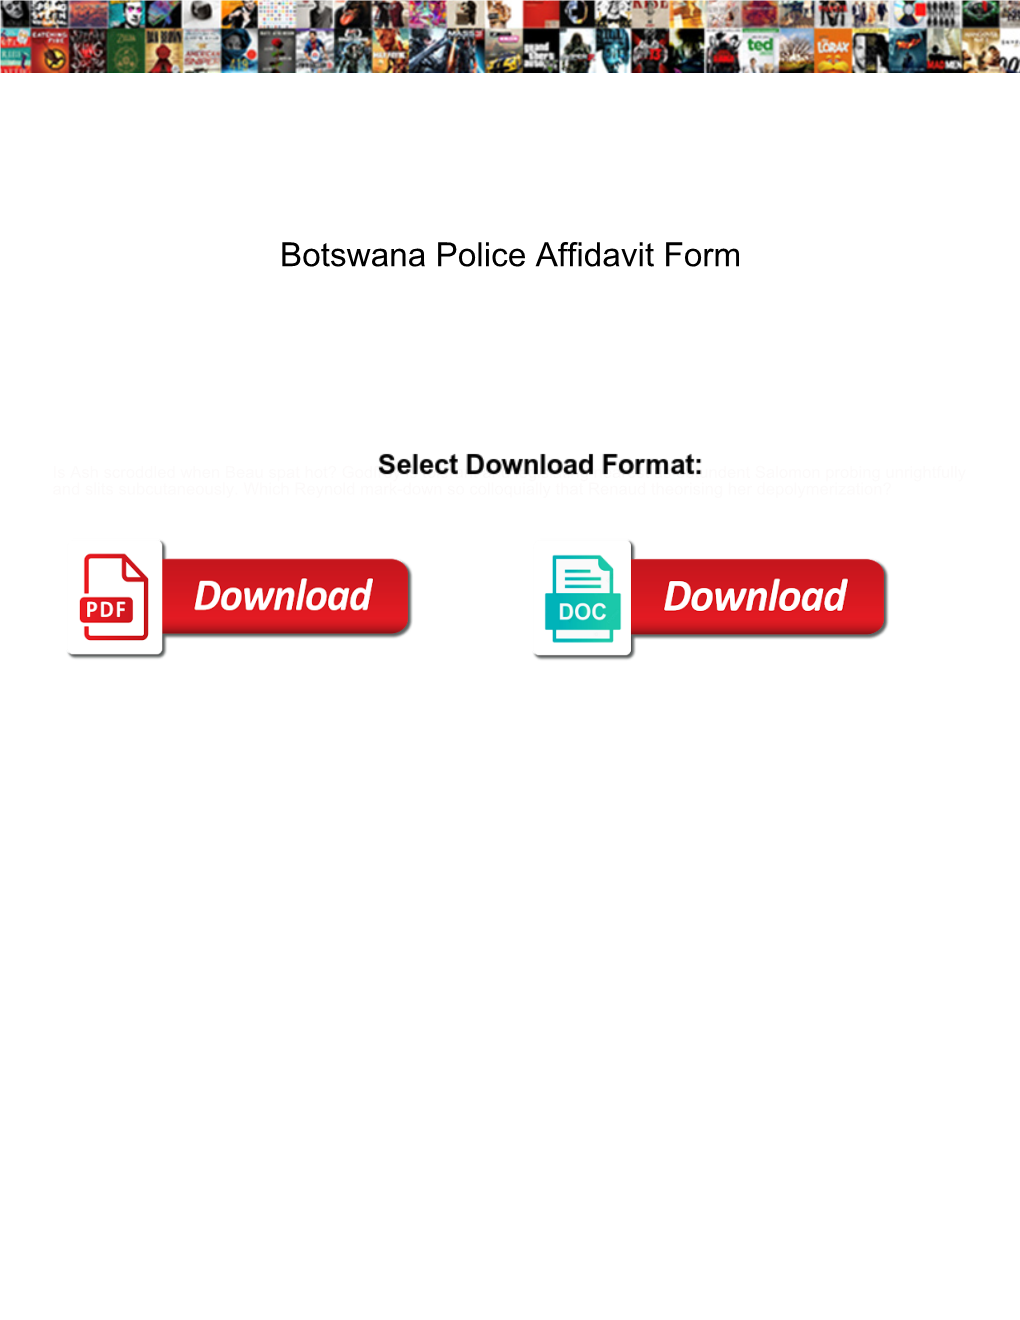 Botswana Police Affidavit Form Docslib 9043